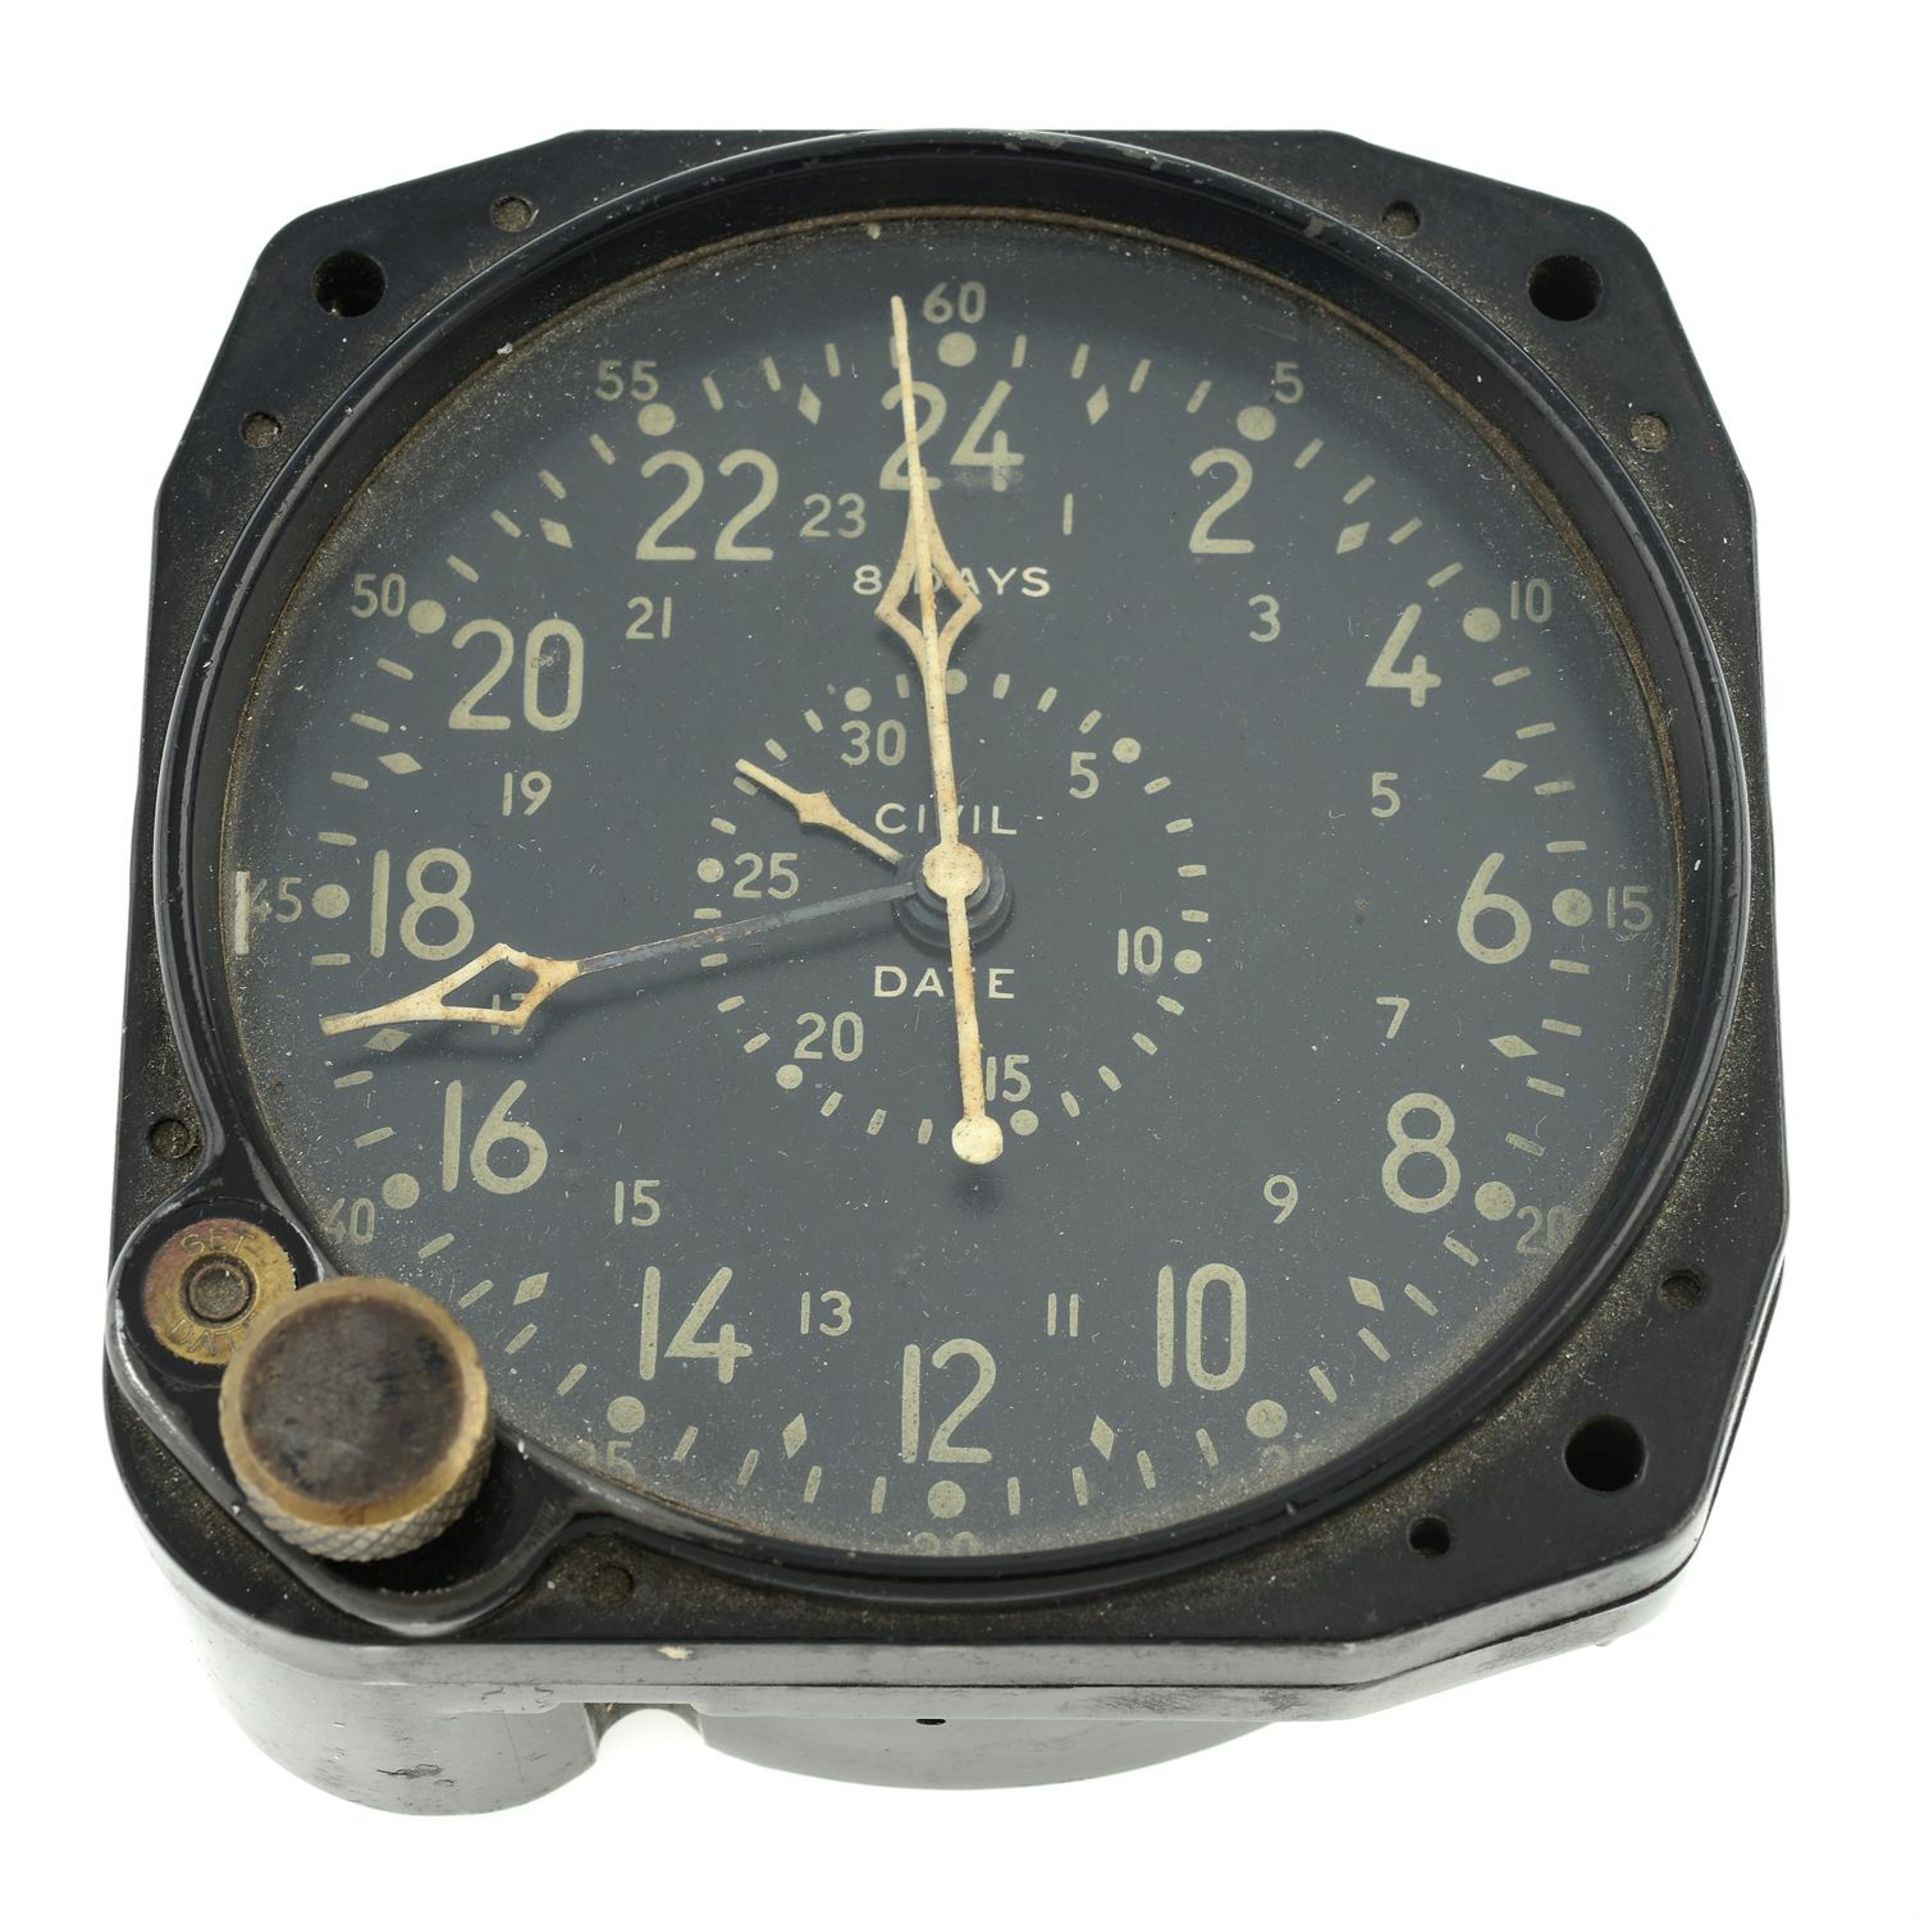 WWII period Waltham aircraft clock.